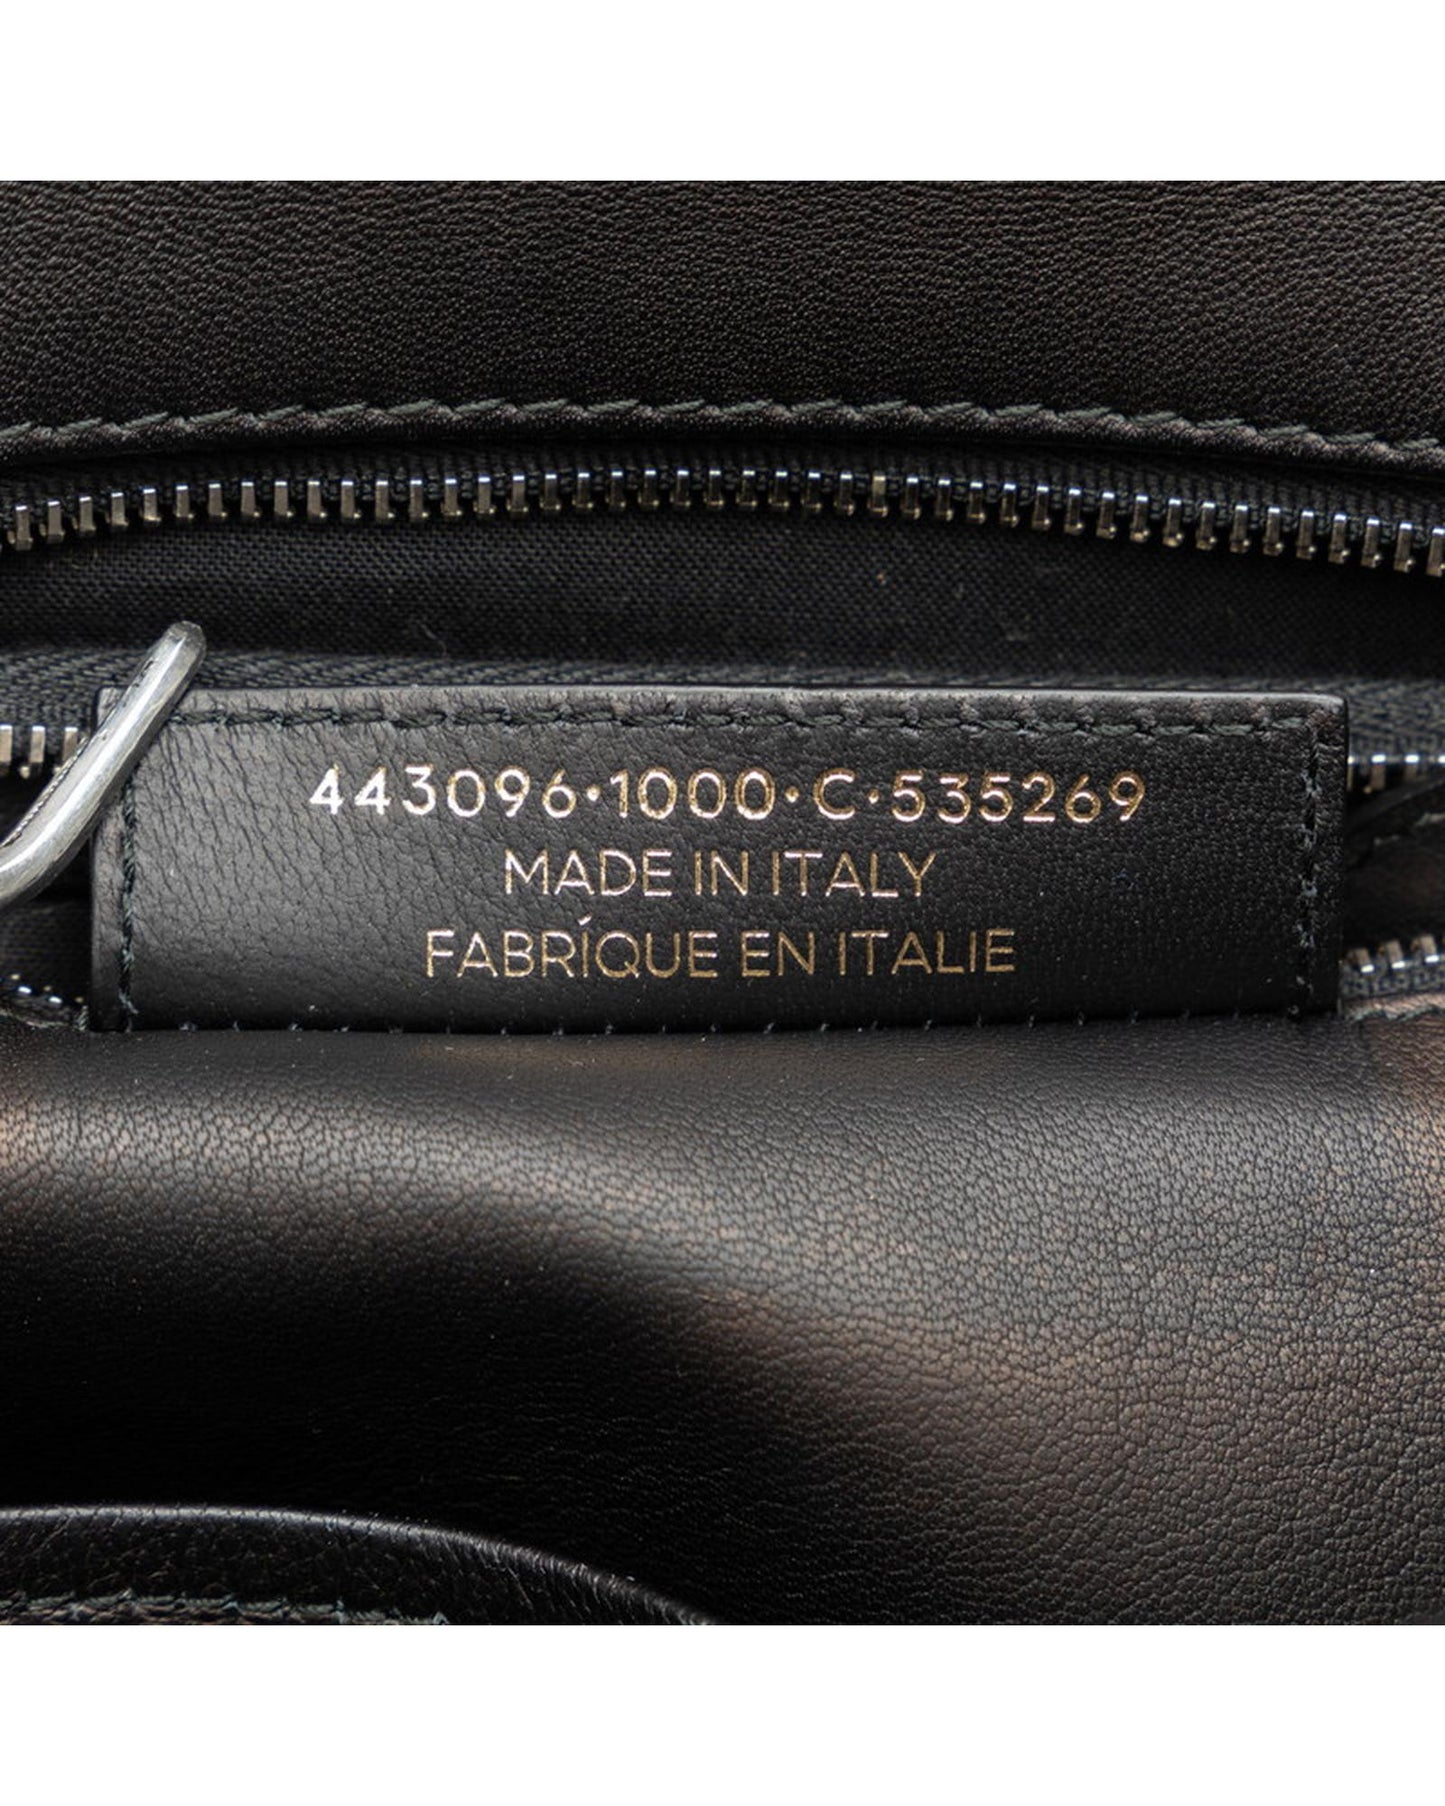 Balenciaga Women's Black Leather Shopper Tote Bag - Excellent Condition in Black